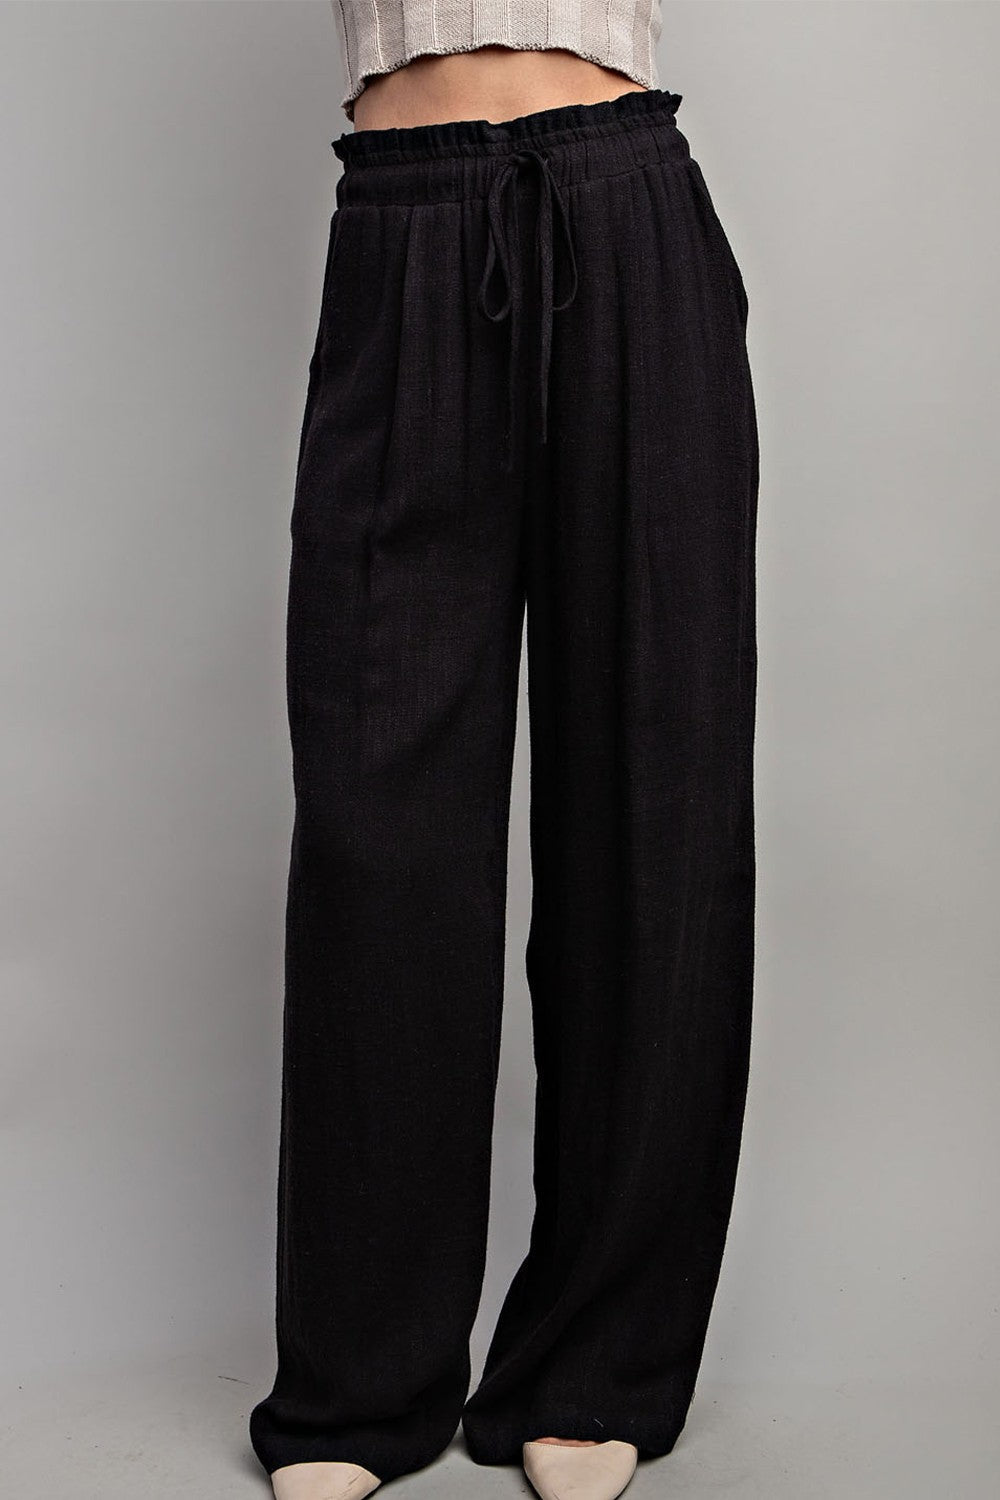 Black Linen Pants - KC Outfitter